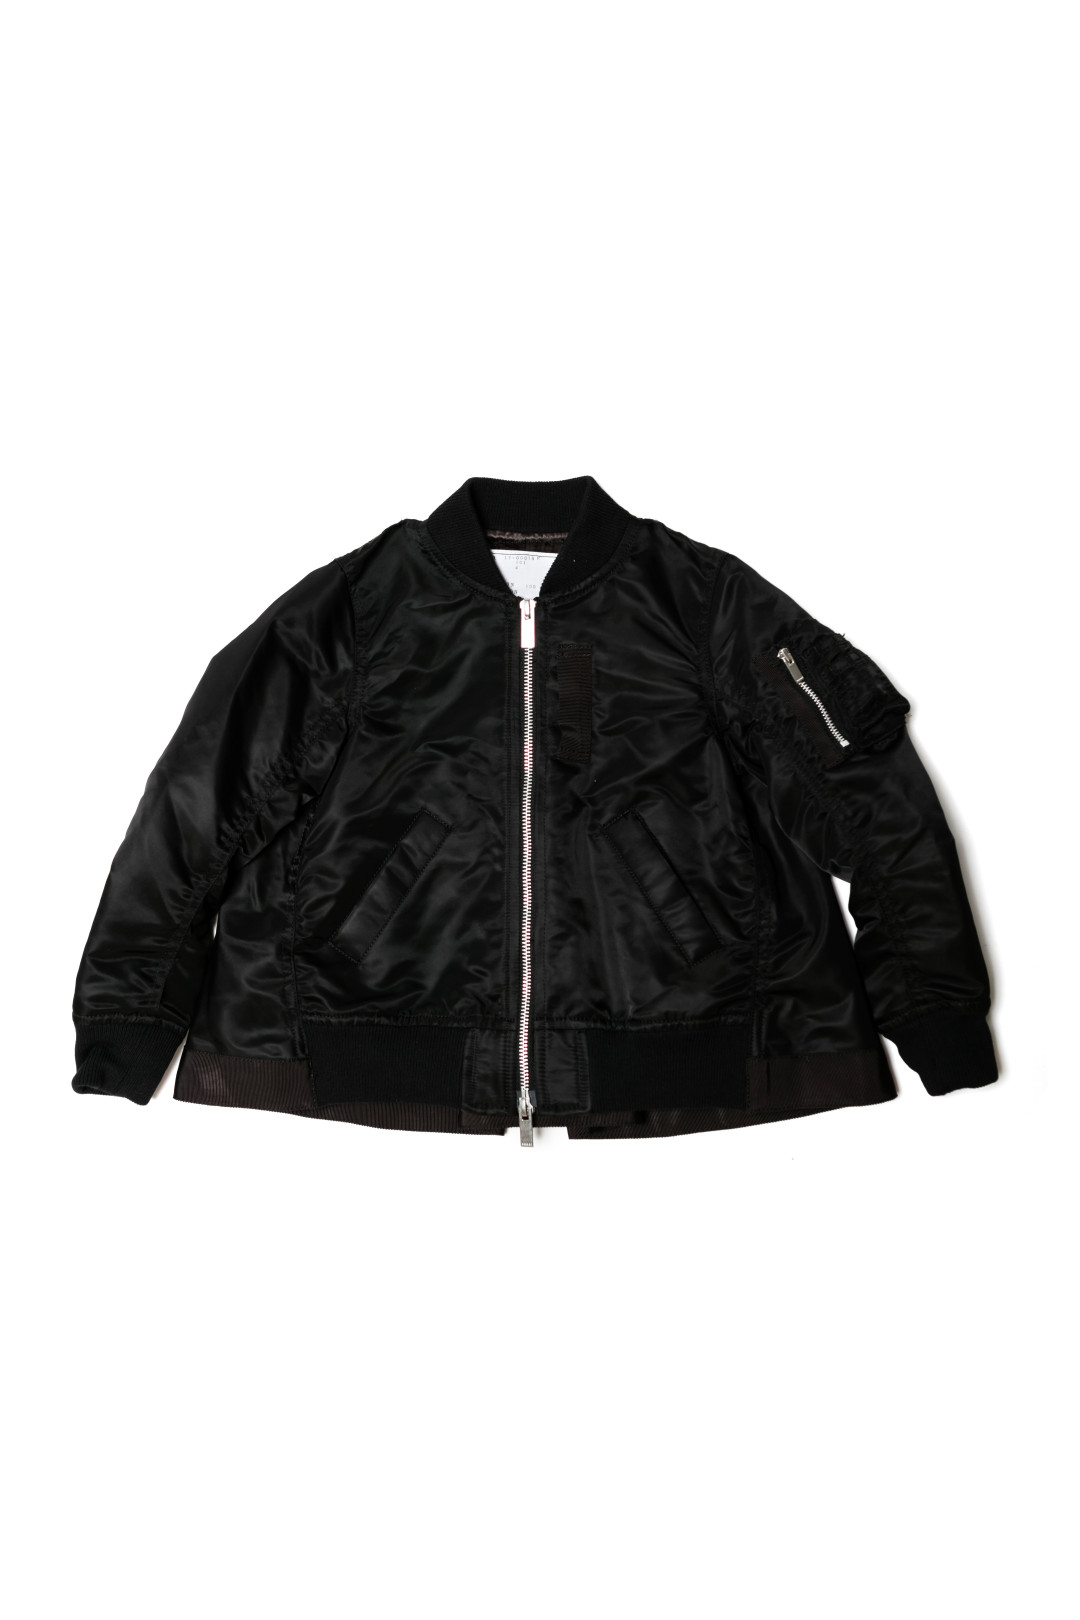 Jacket 17-00016K/Black 5万4,000円